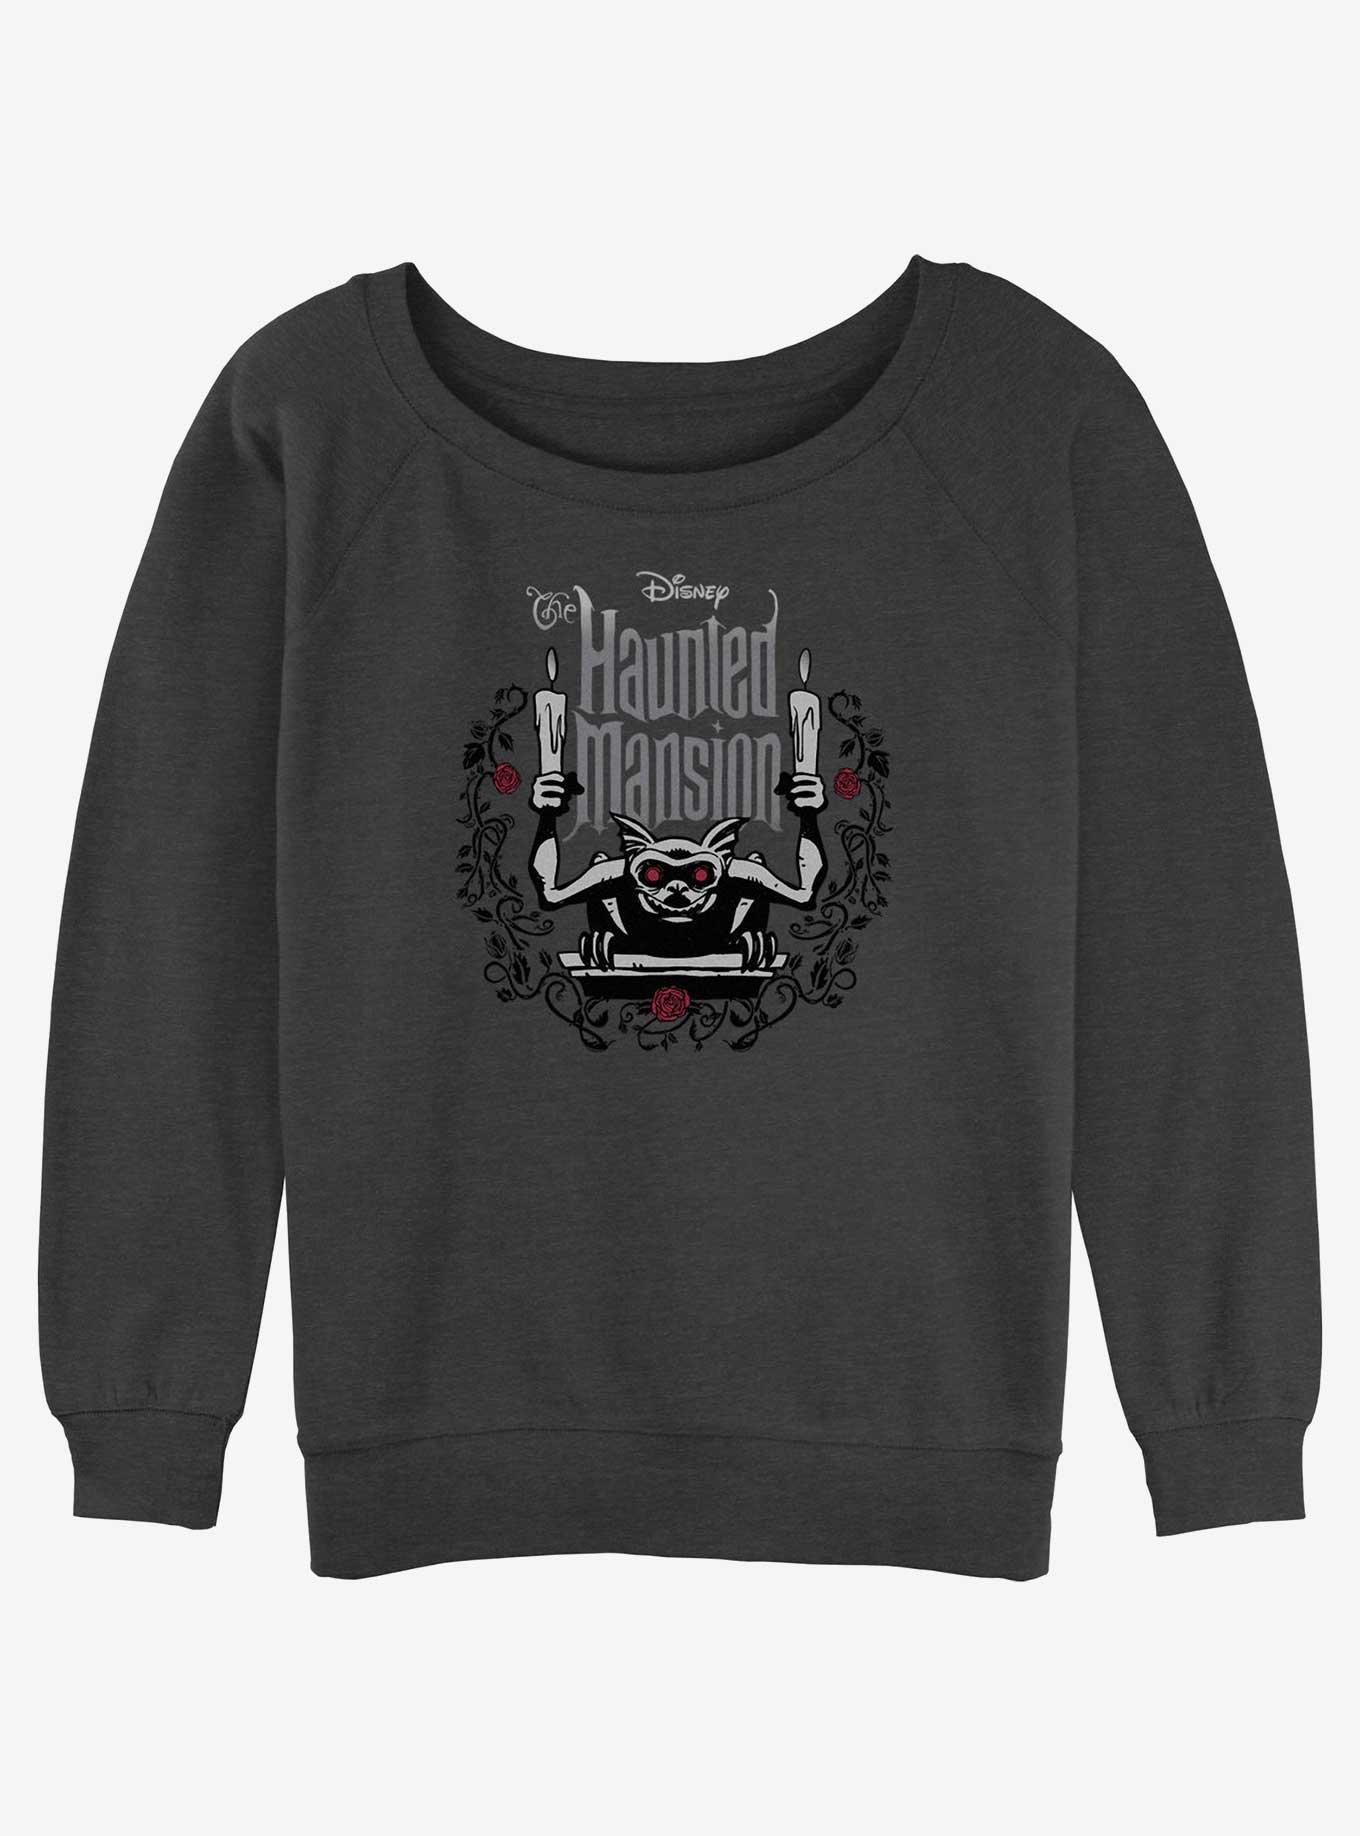 Disney Haunted Mansion Gargoyle With Candles Girls Slouchy Sweatshirt, CHAR HTR, hi-res